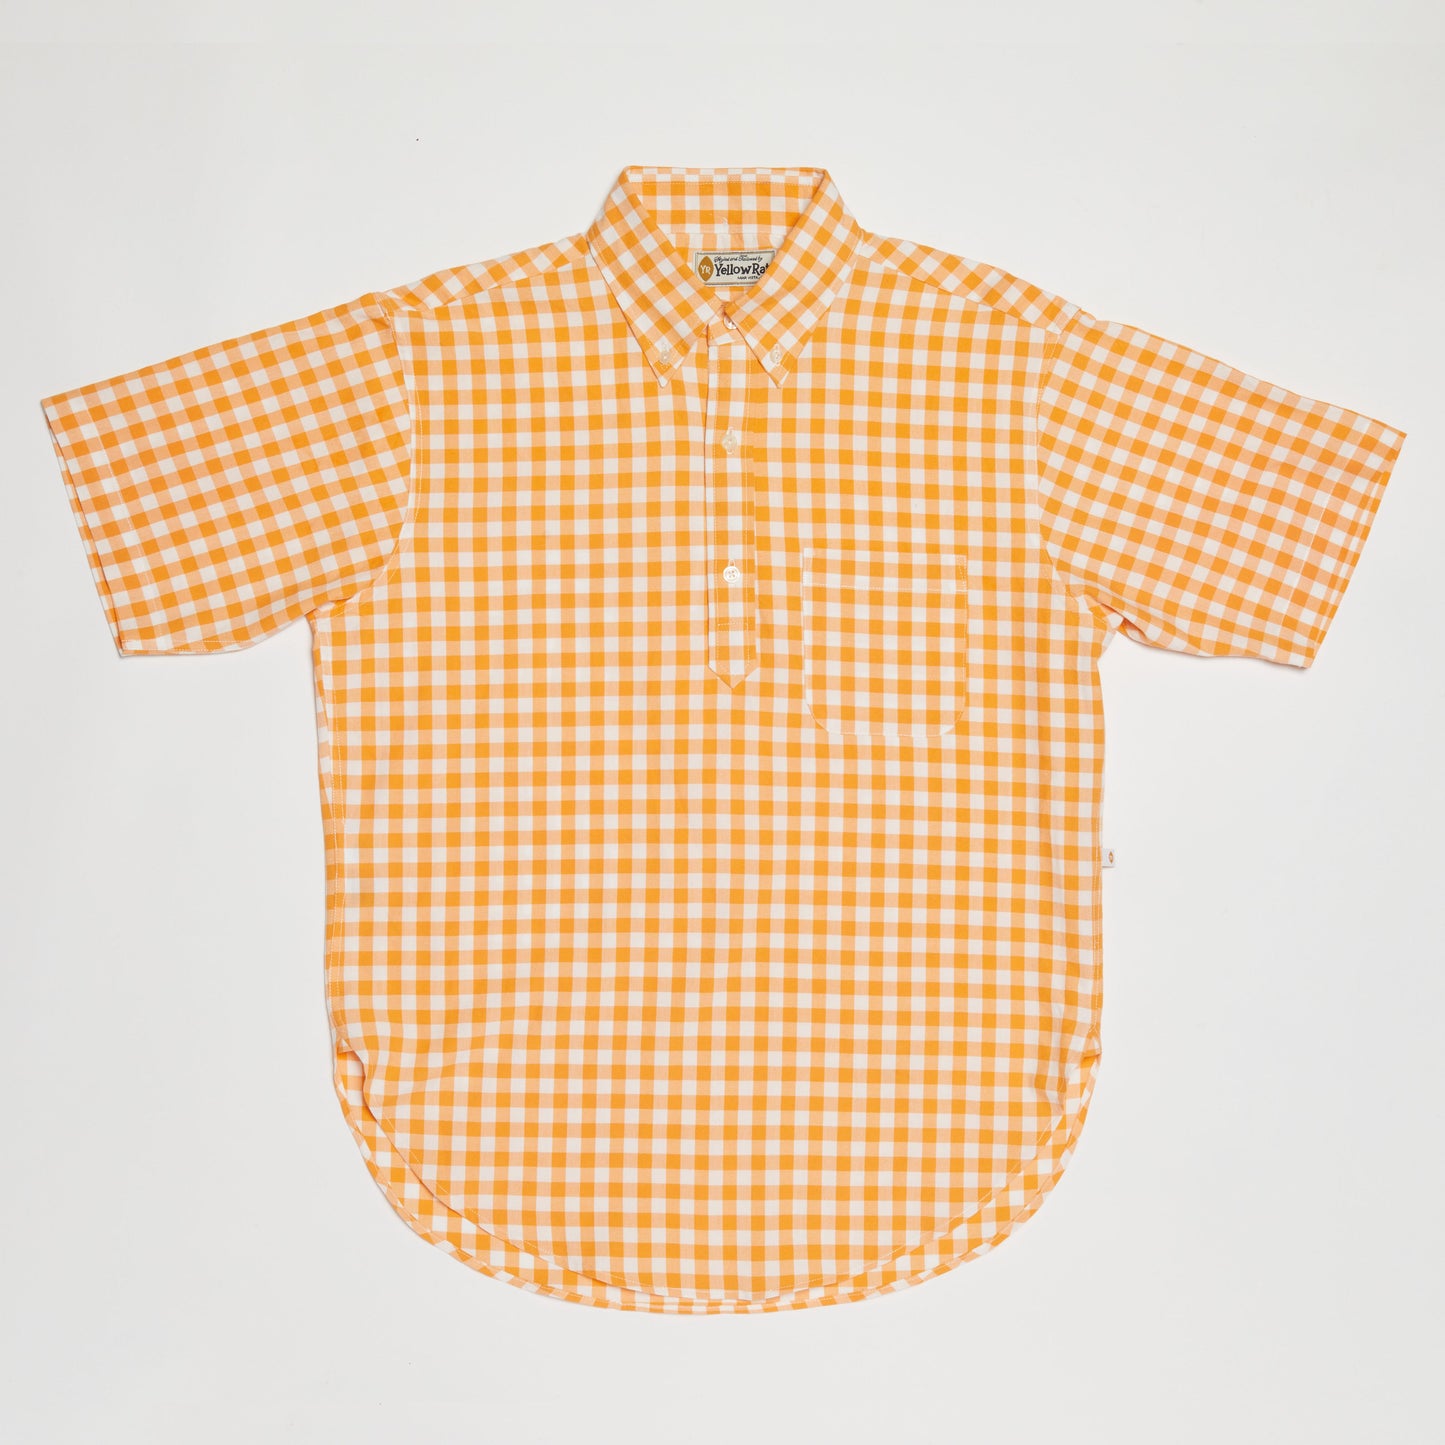 Pull-over Button-down Shirt (Orange)